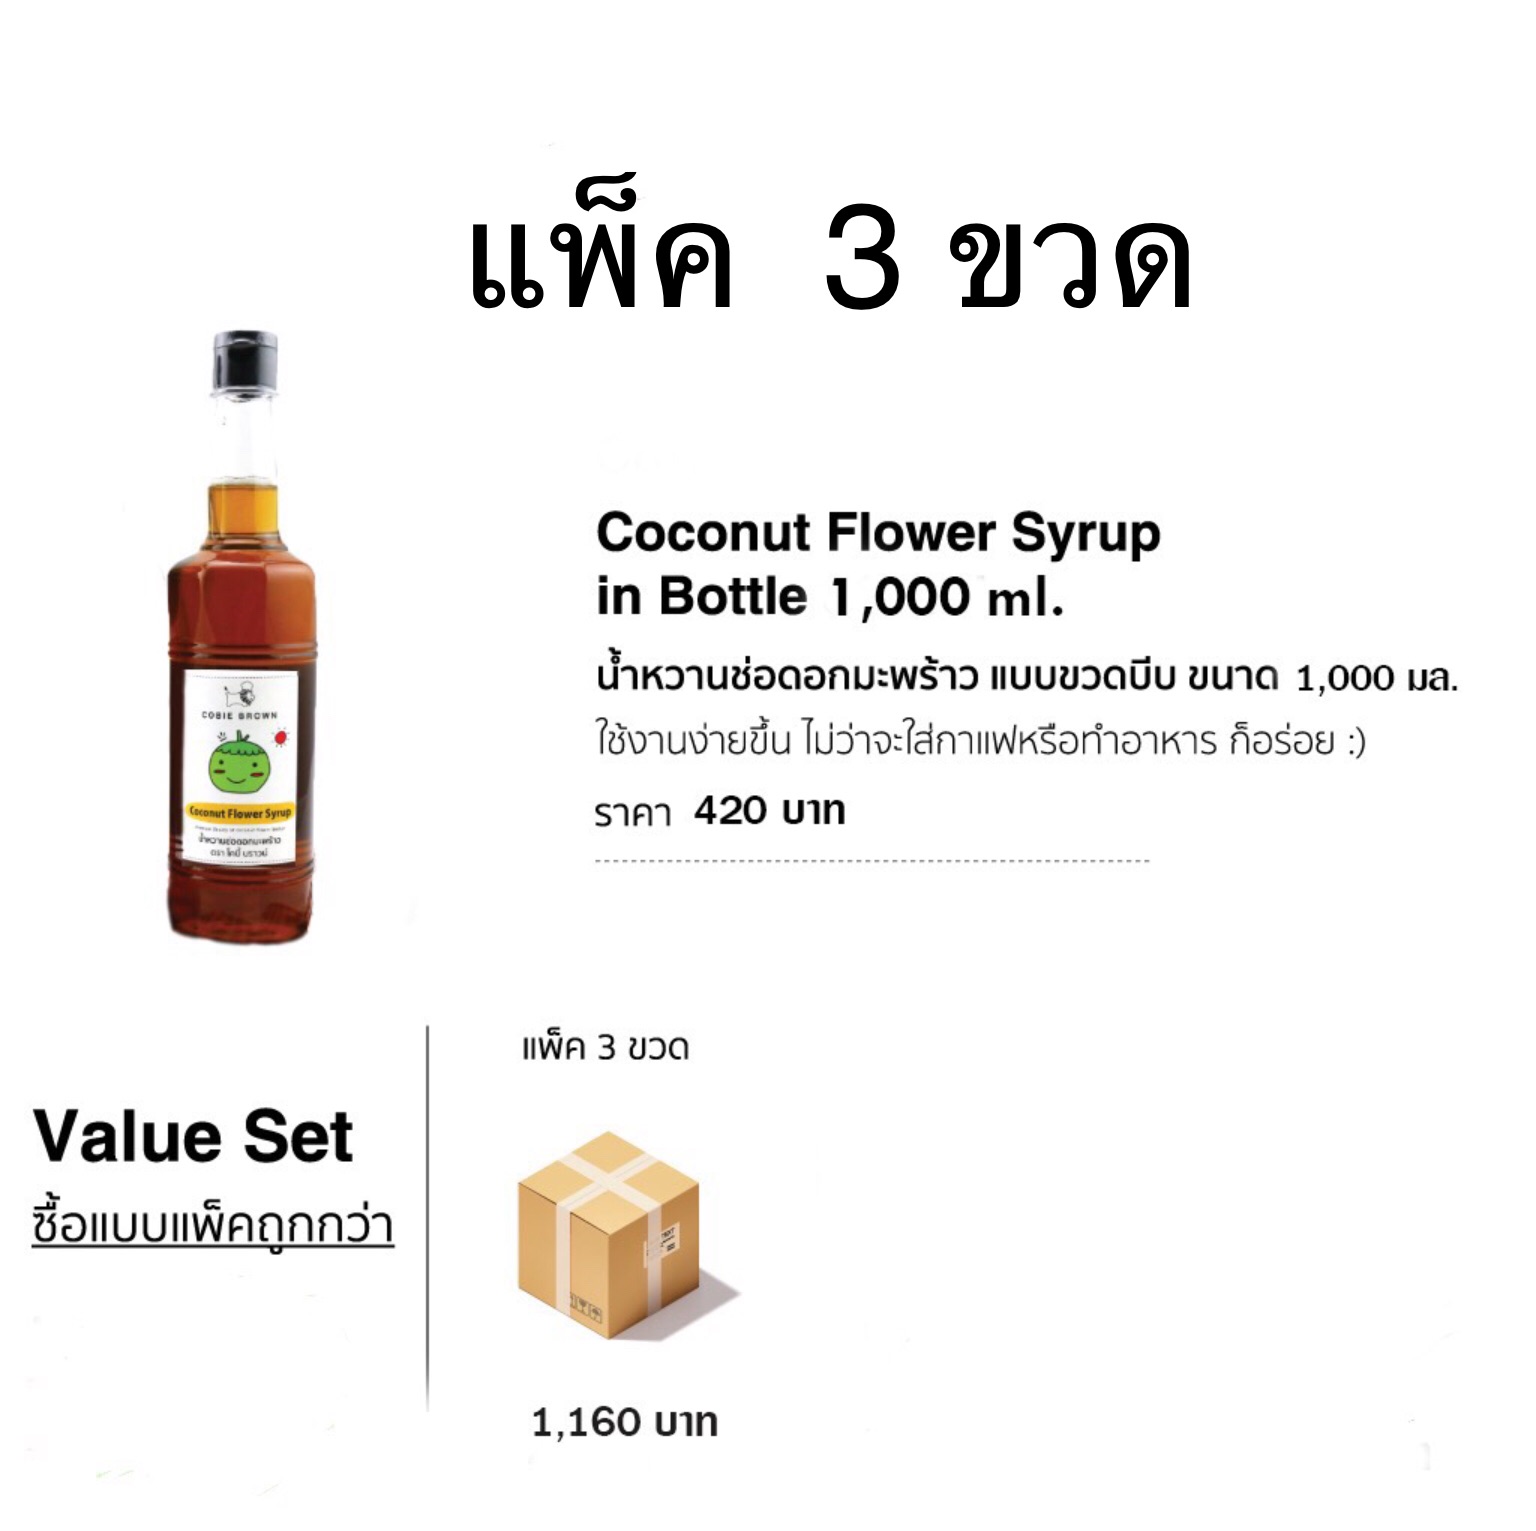 Coconut Flower Syrup in Bottle 1,000ml. X 3